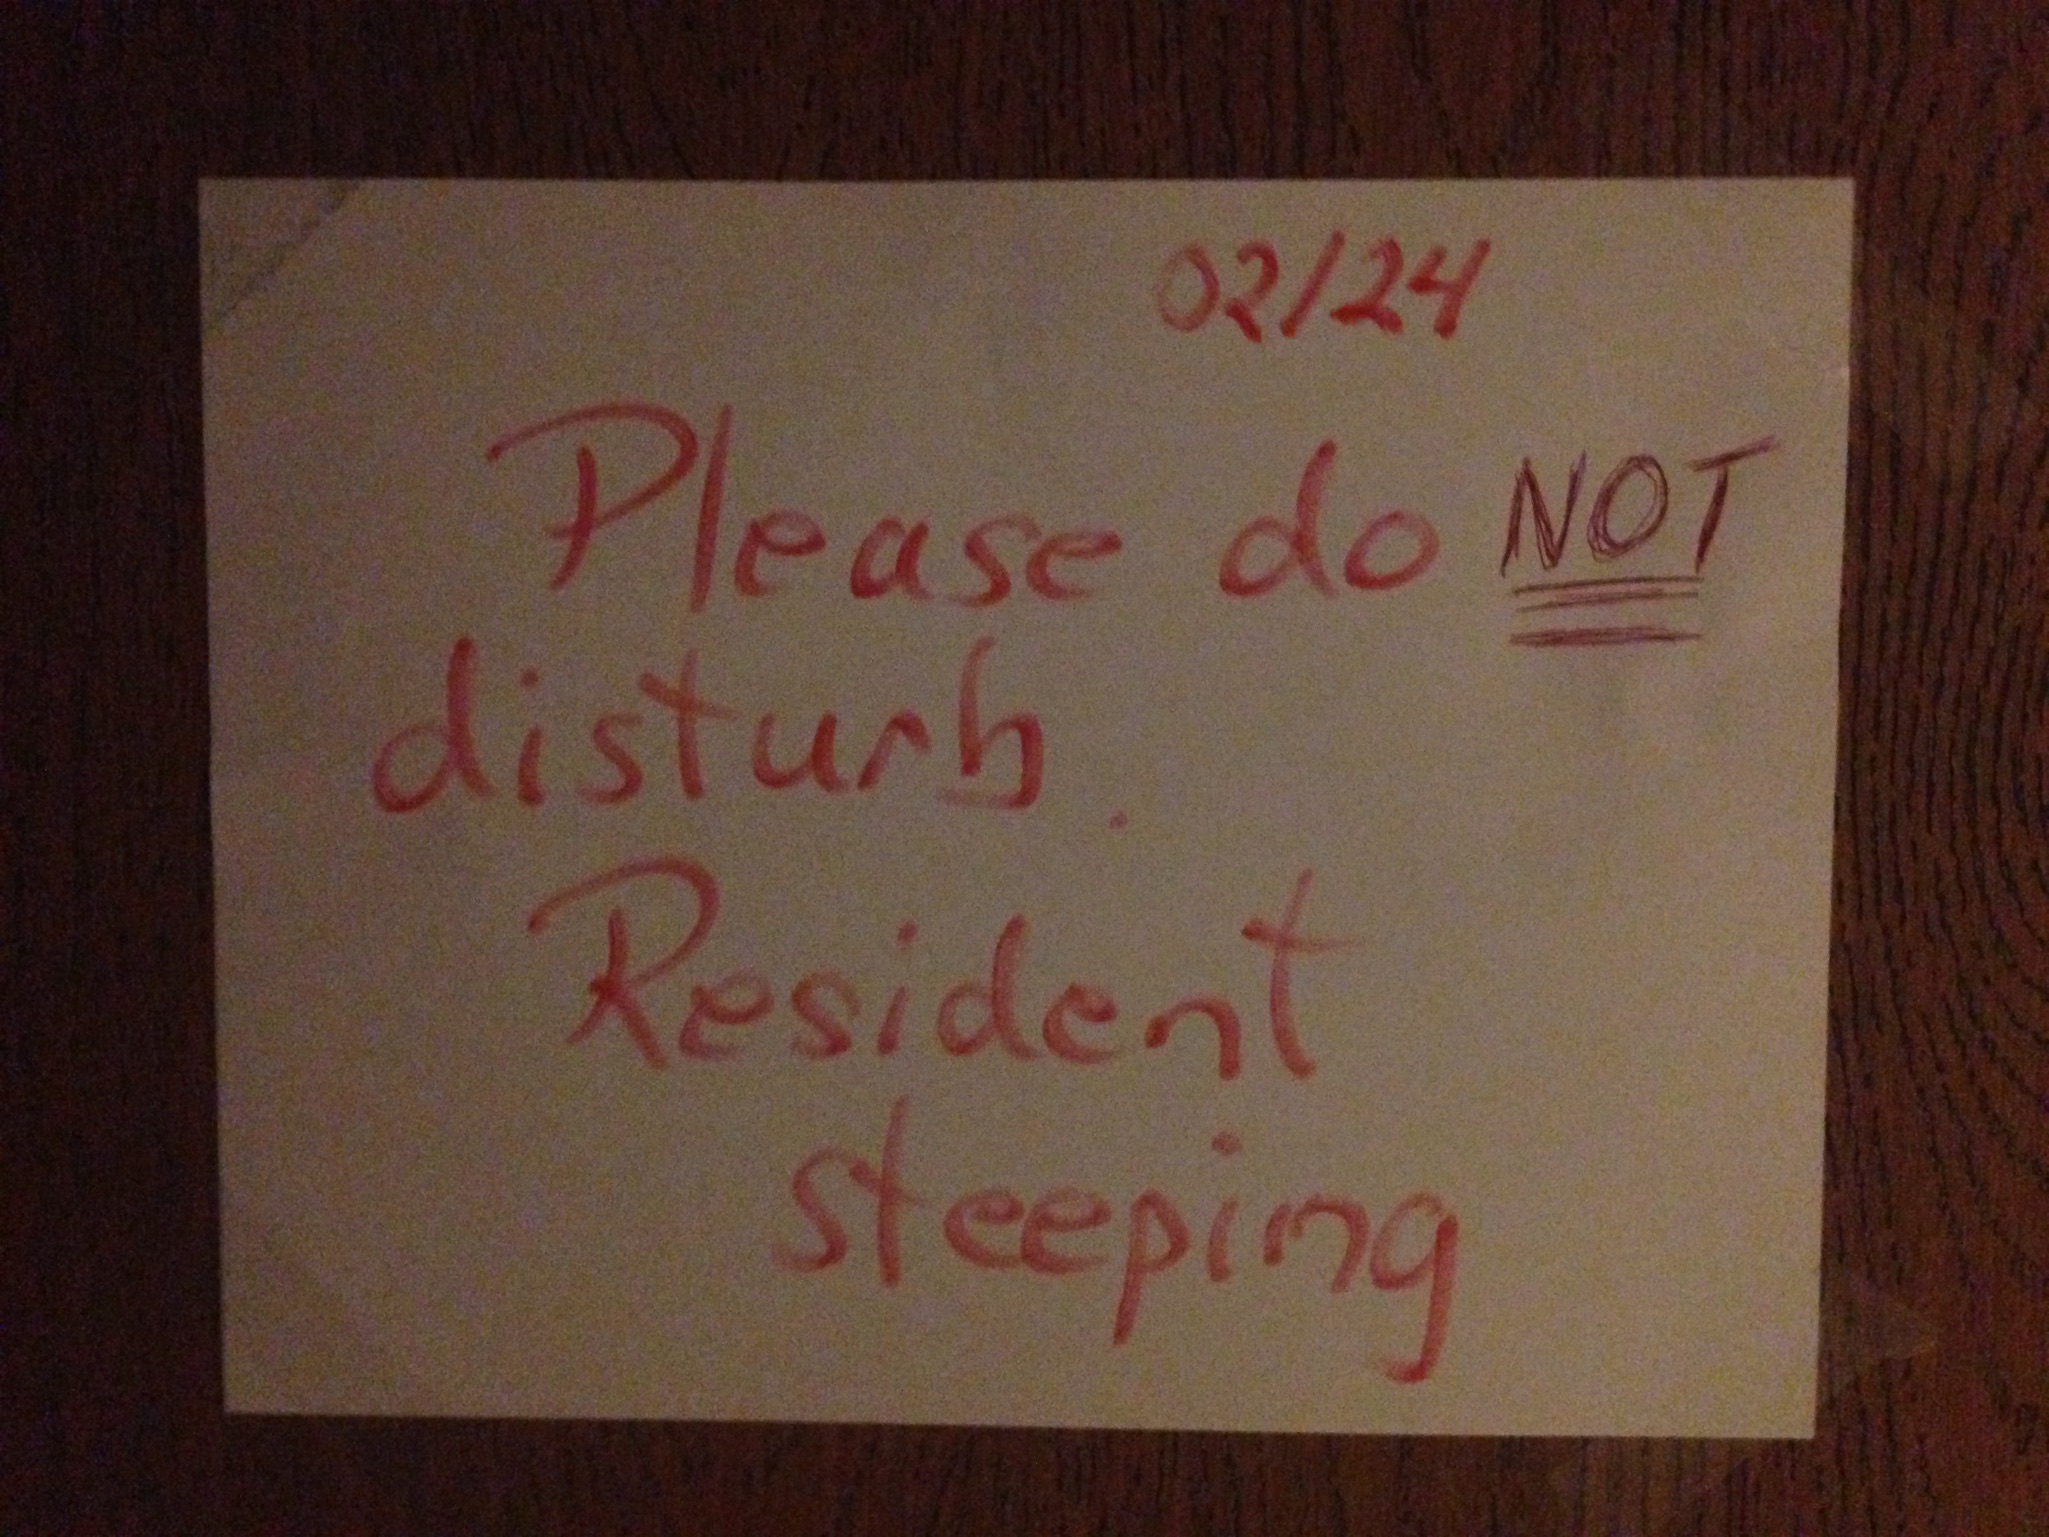 An image of a do not disturb sign.